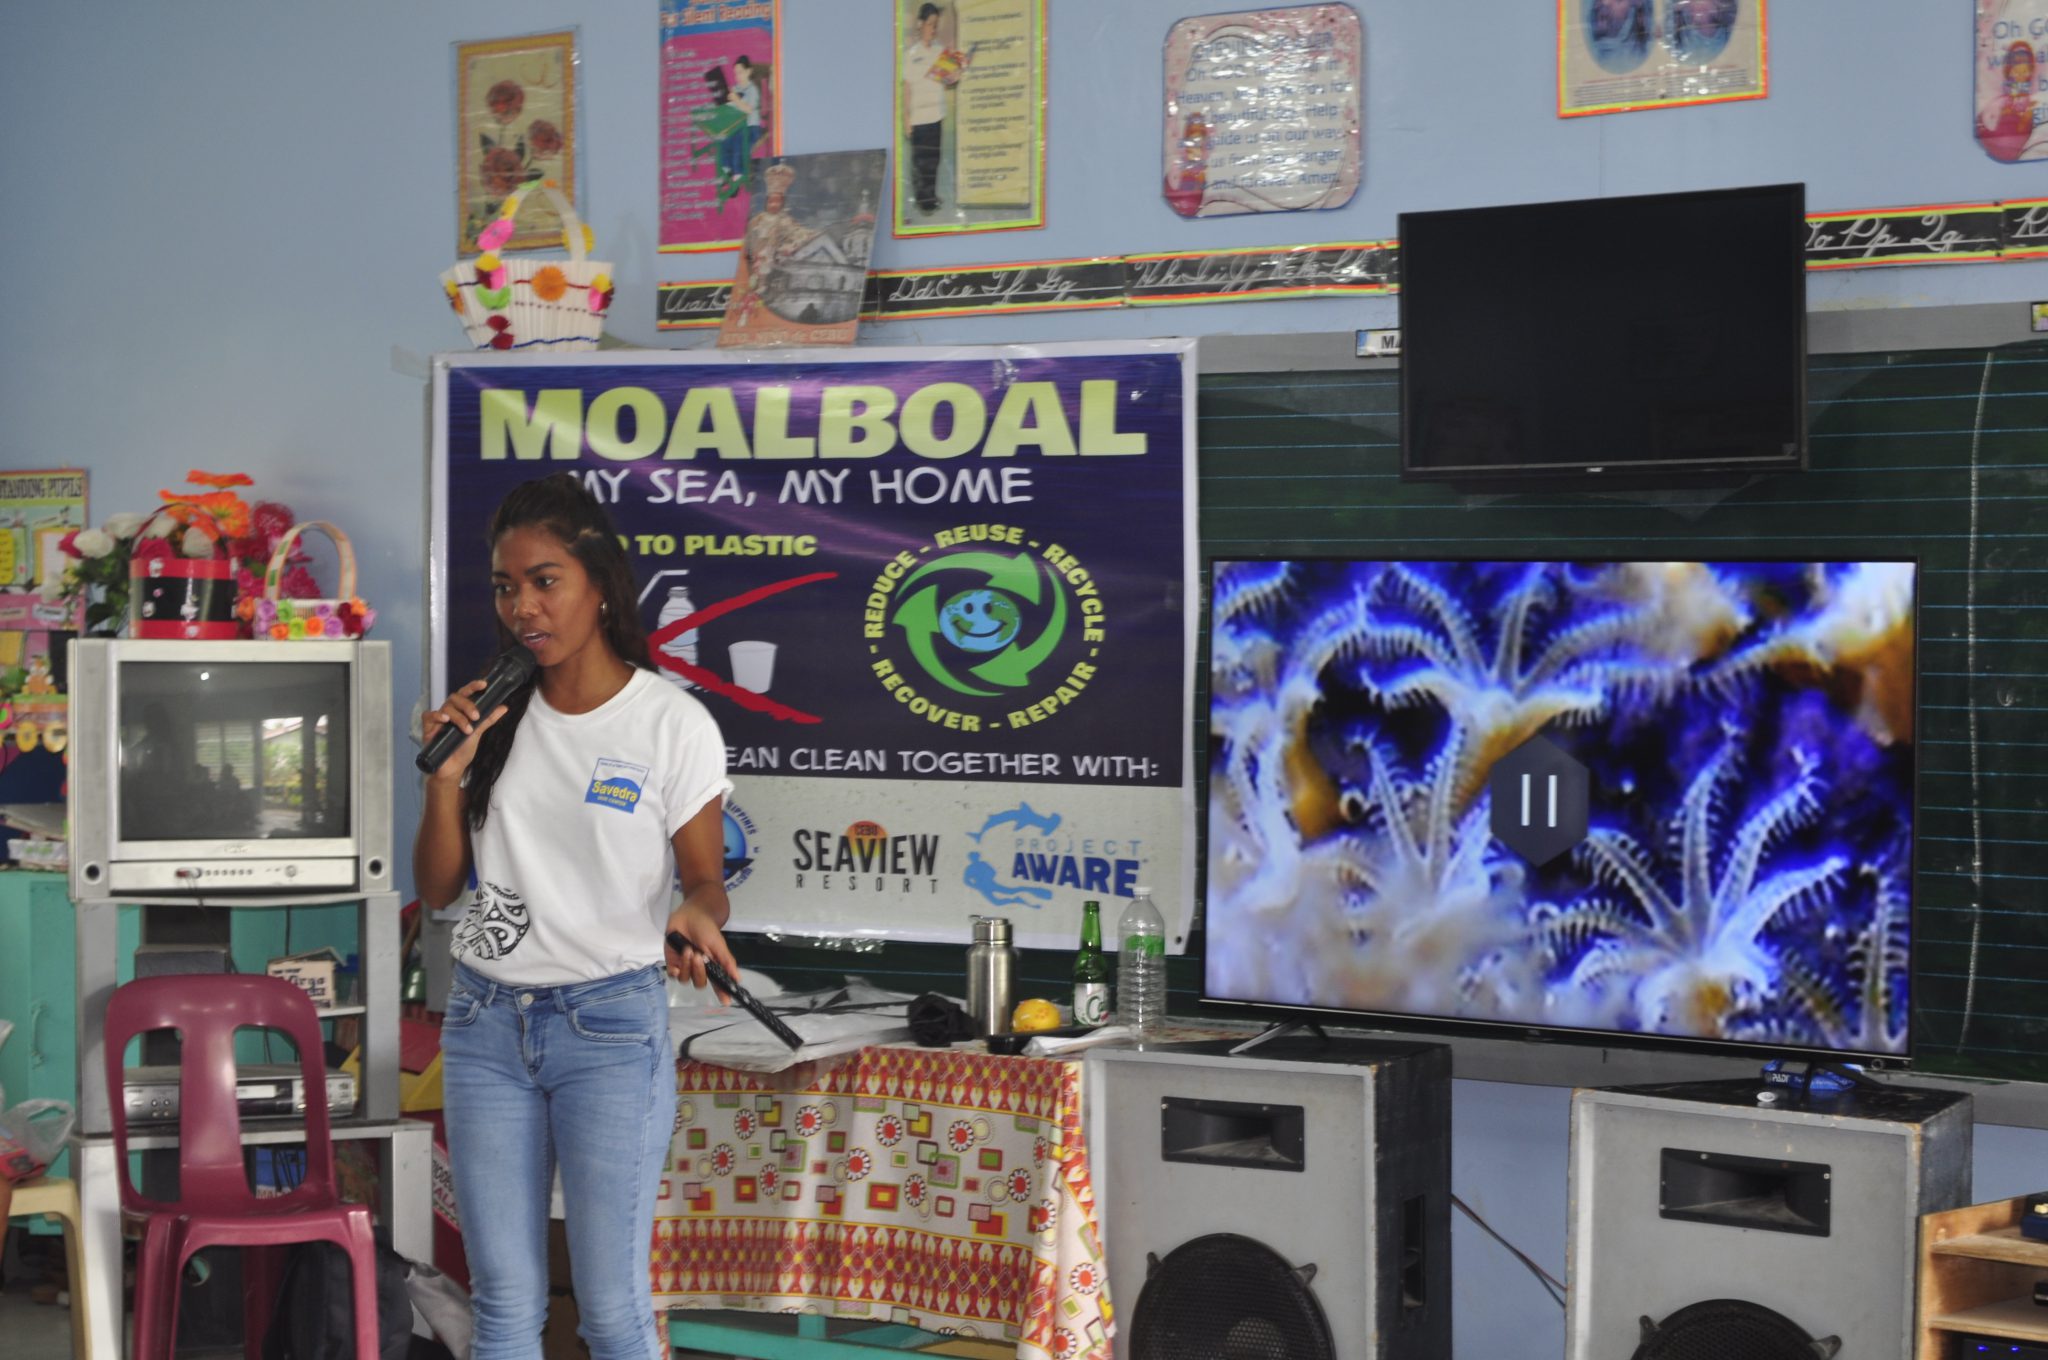 Basdiot Elementary School - Moalboal - Philippines - Ocean Conservation